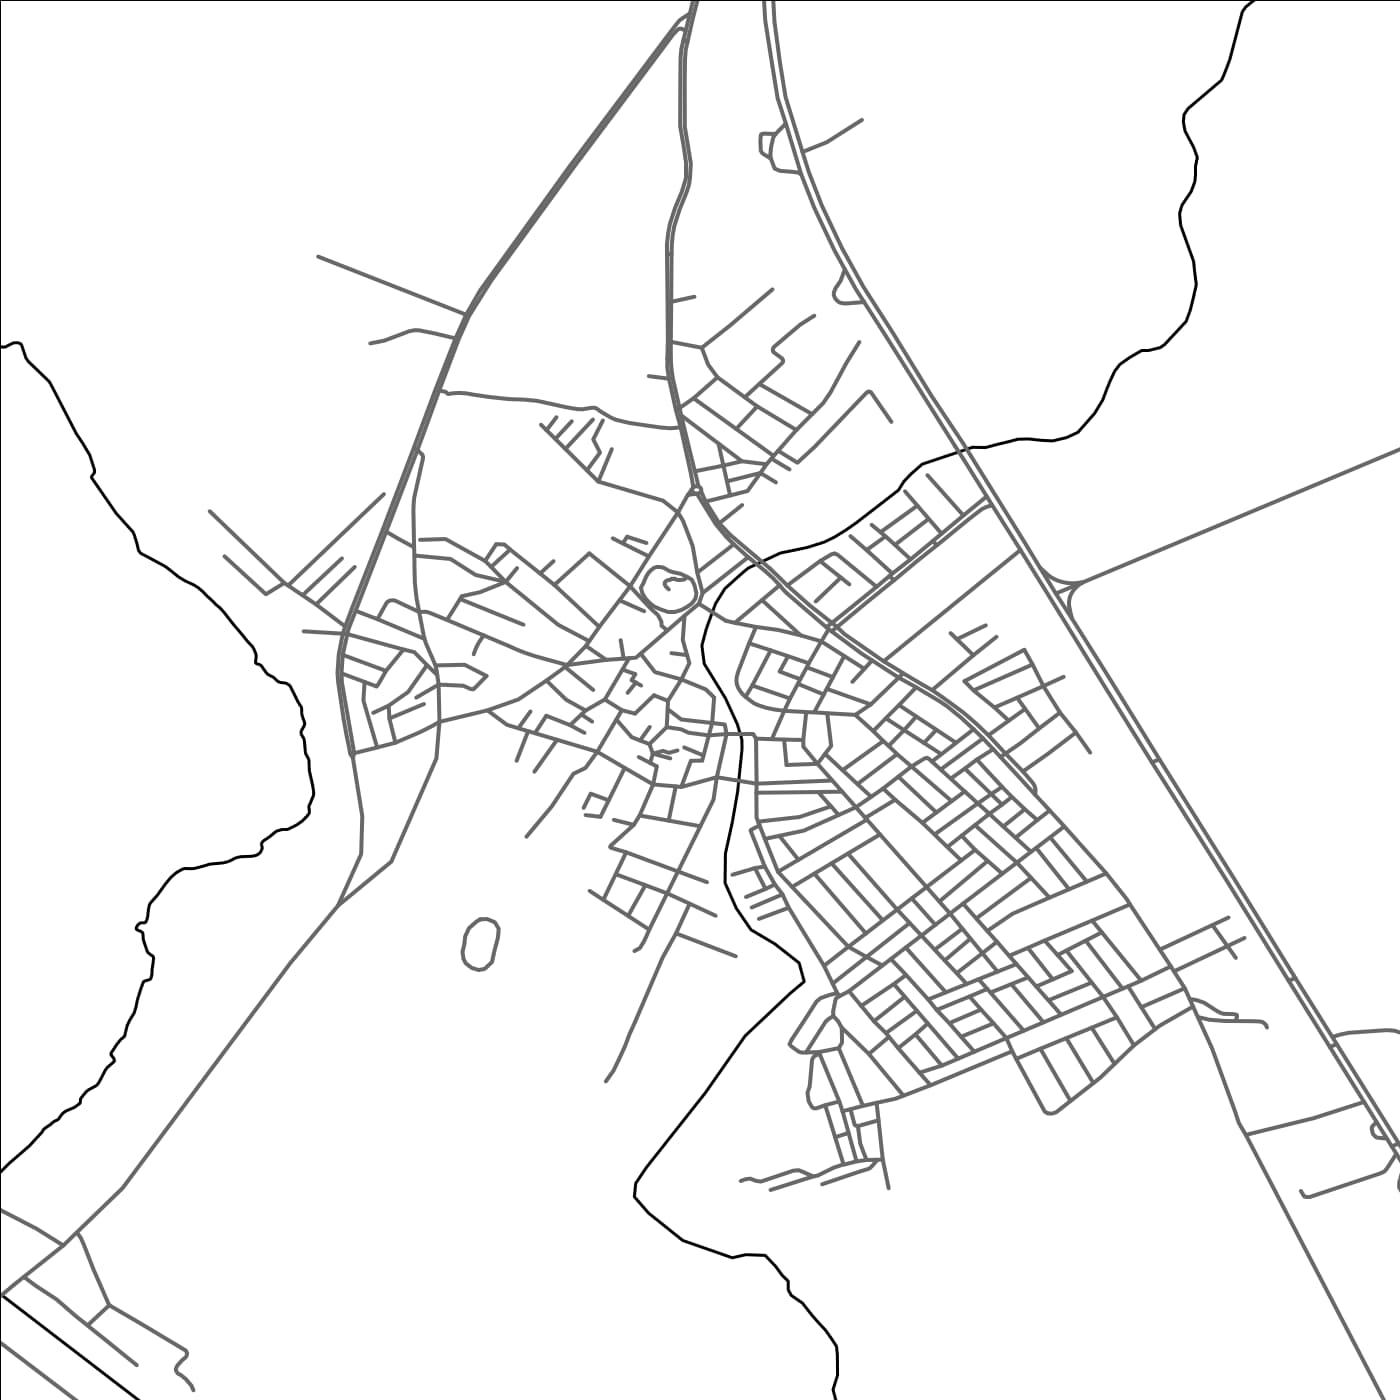 ROAD MAP OF TAZAH KHURMATU, IRAQ BY MAPBAKES